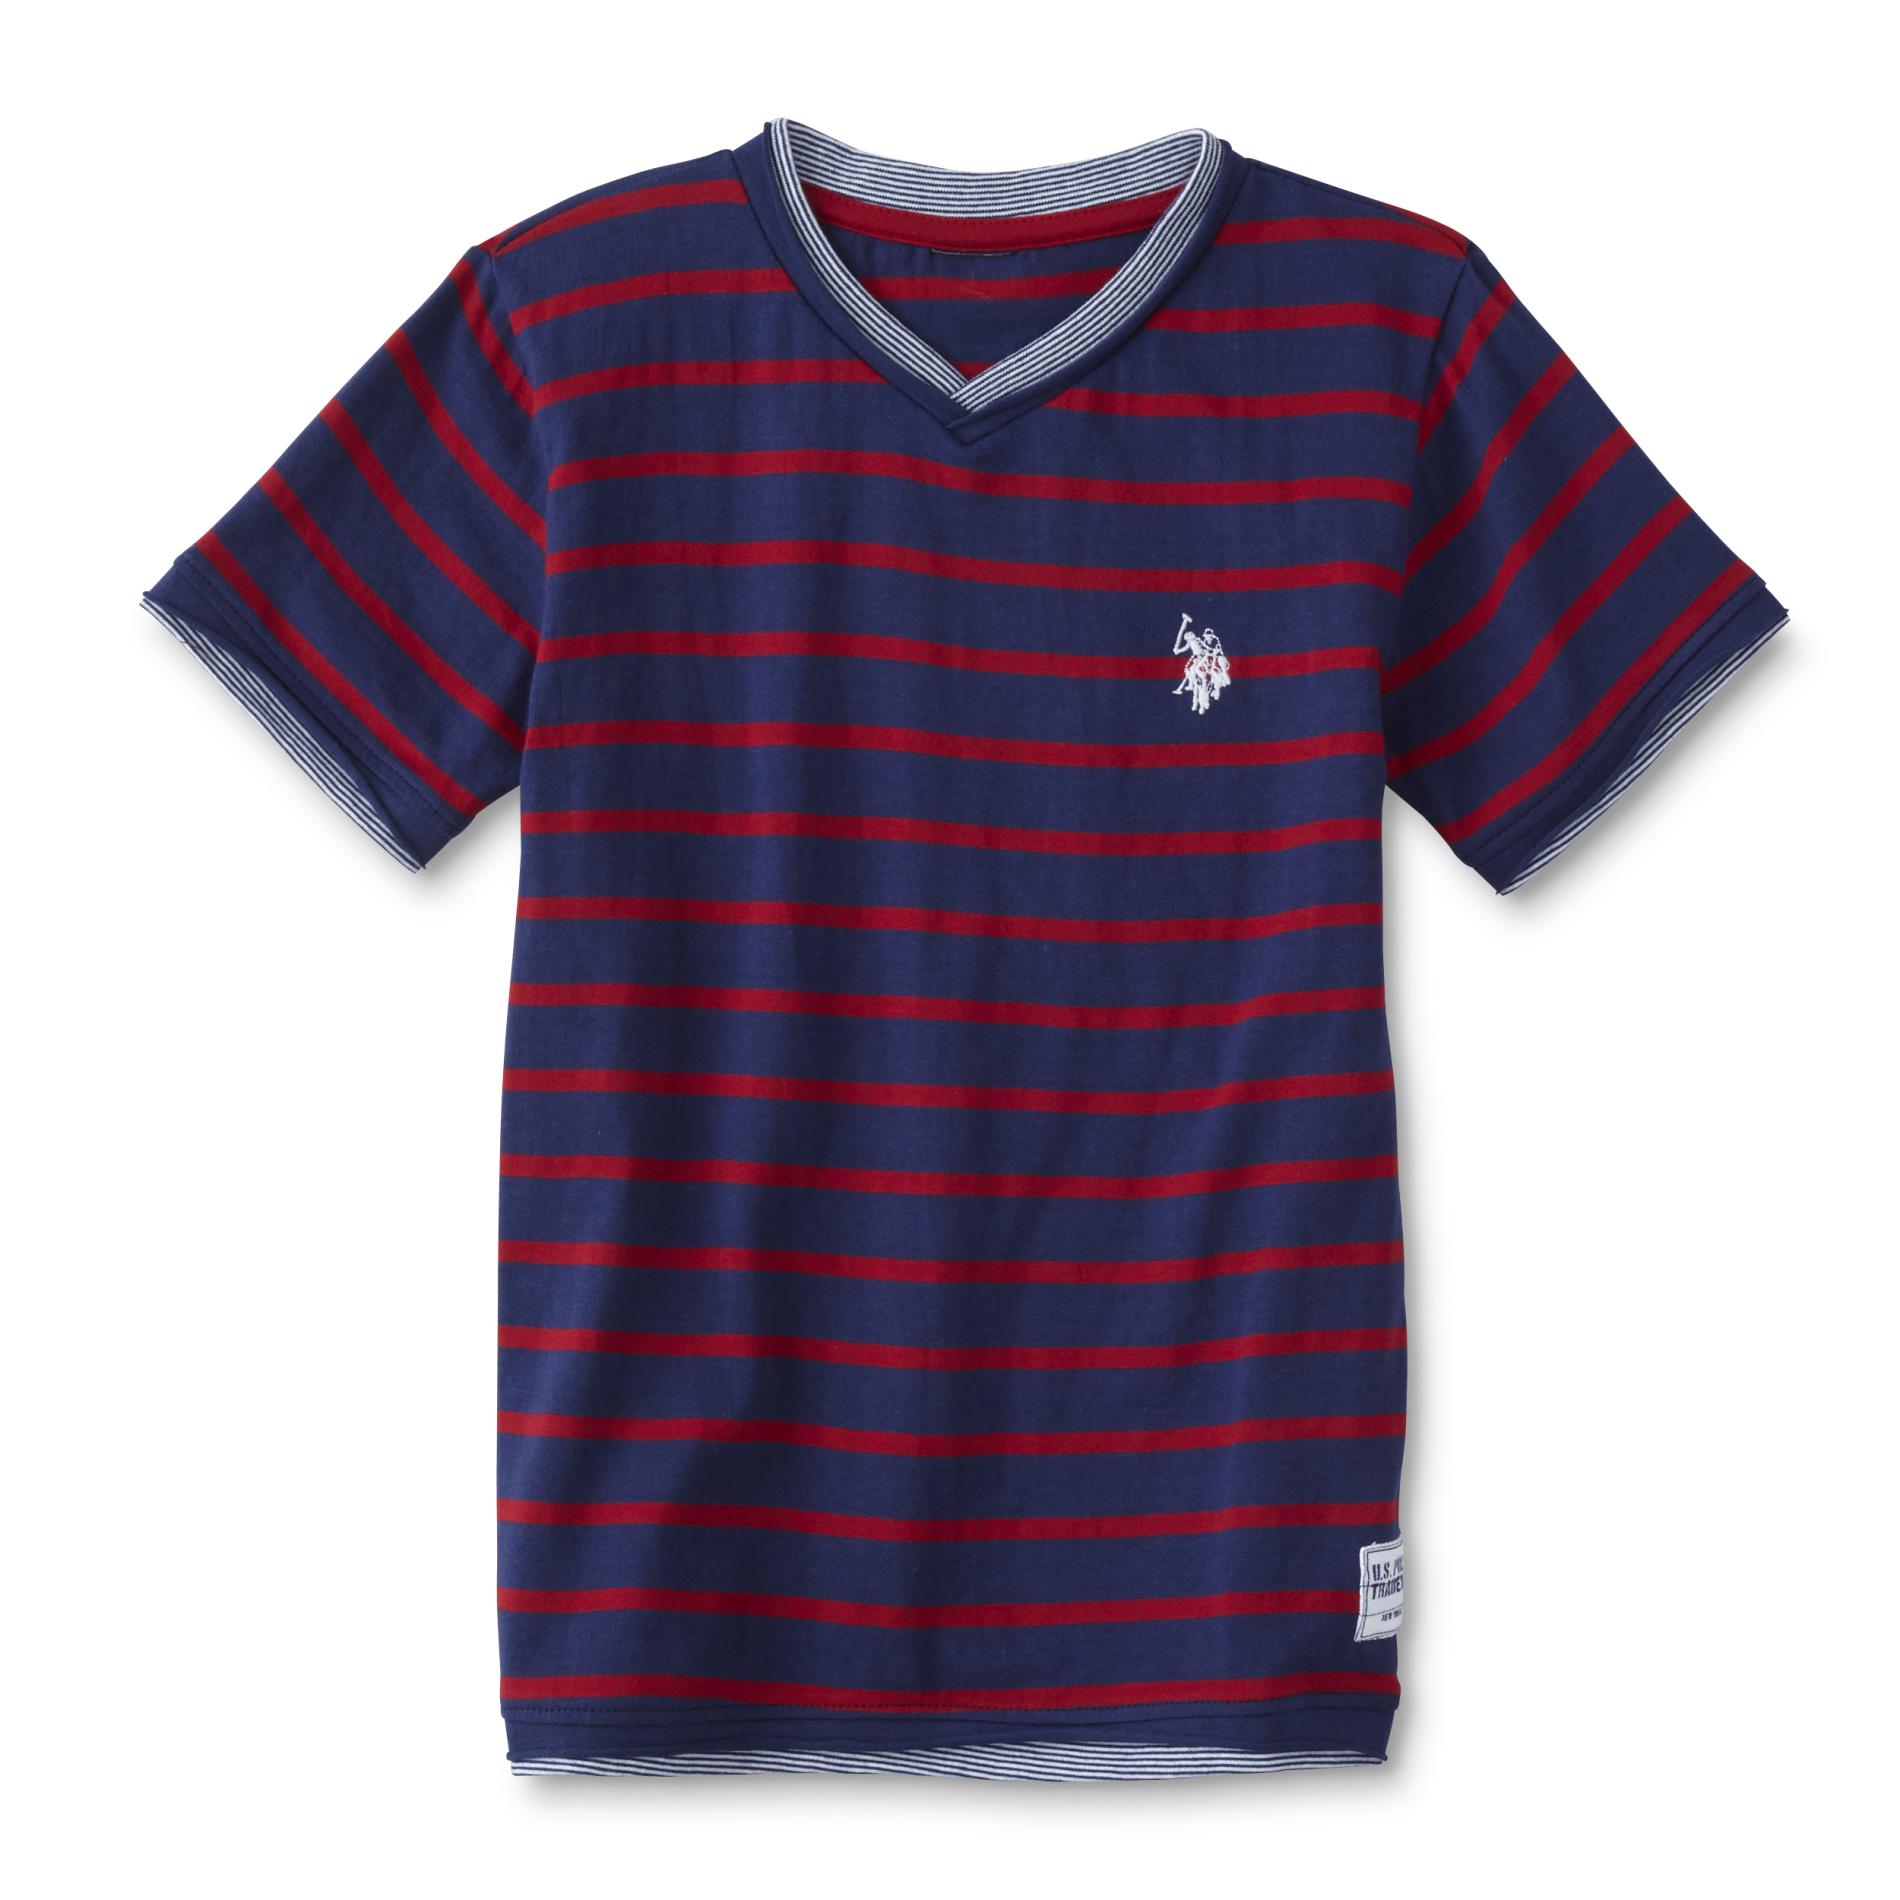 U.S. Polo Assn. Boys' Layered-Look T-Shirt - Striped